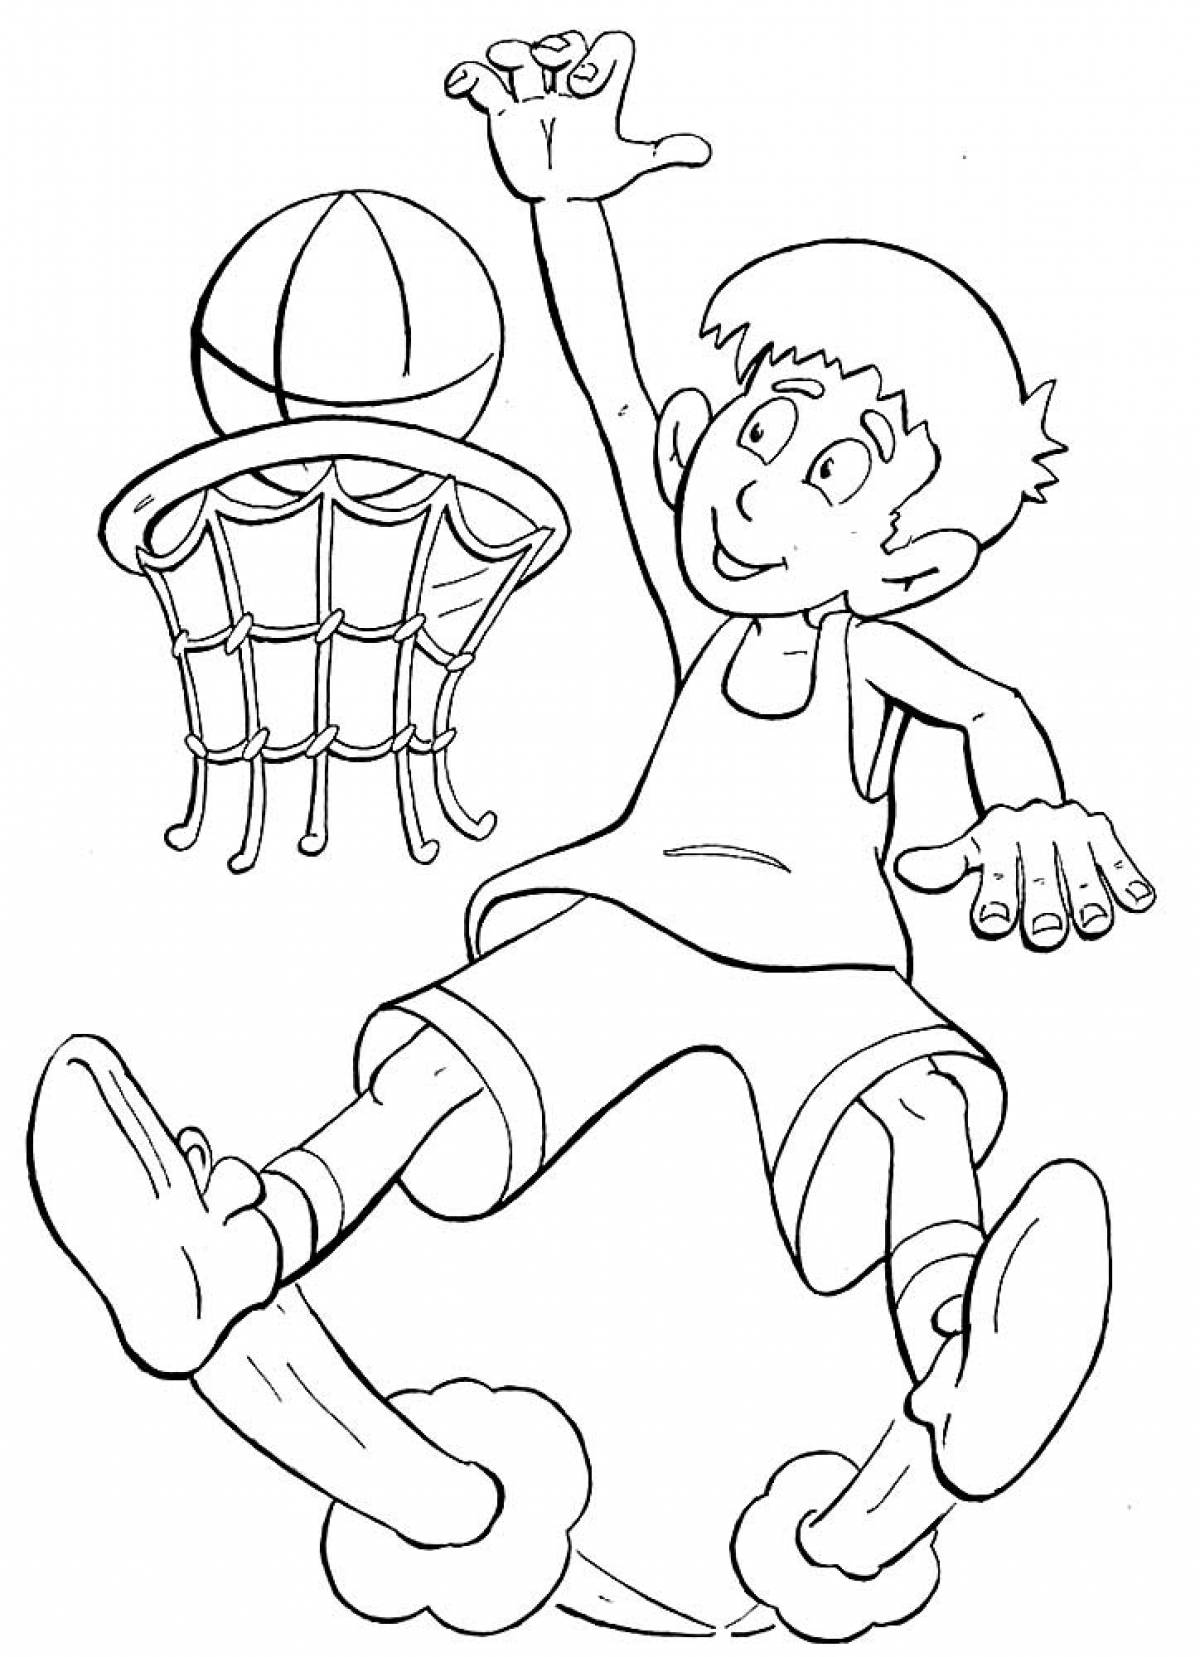 Boy playing basketball